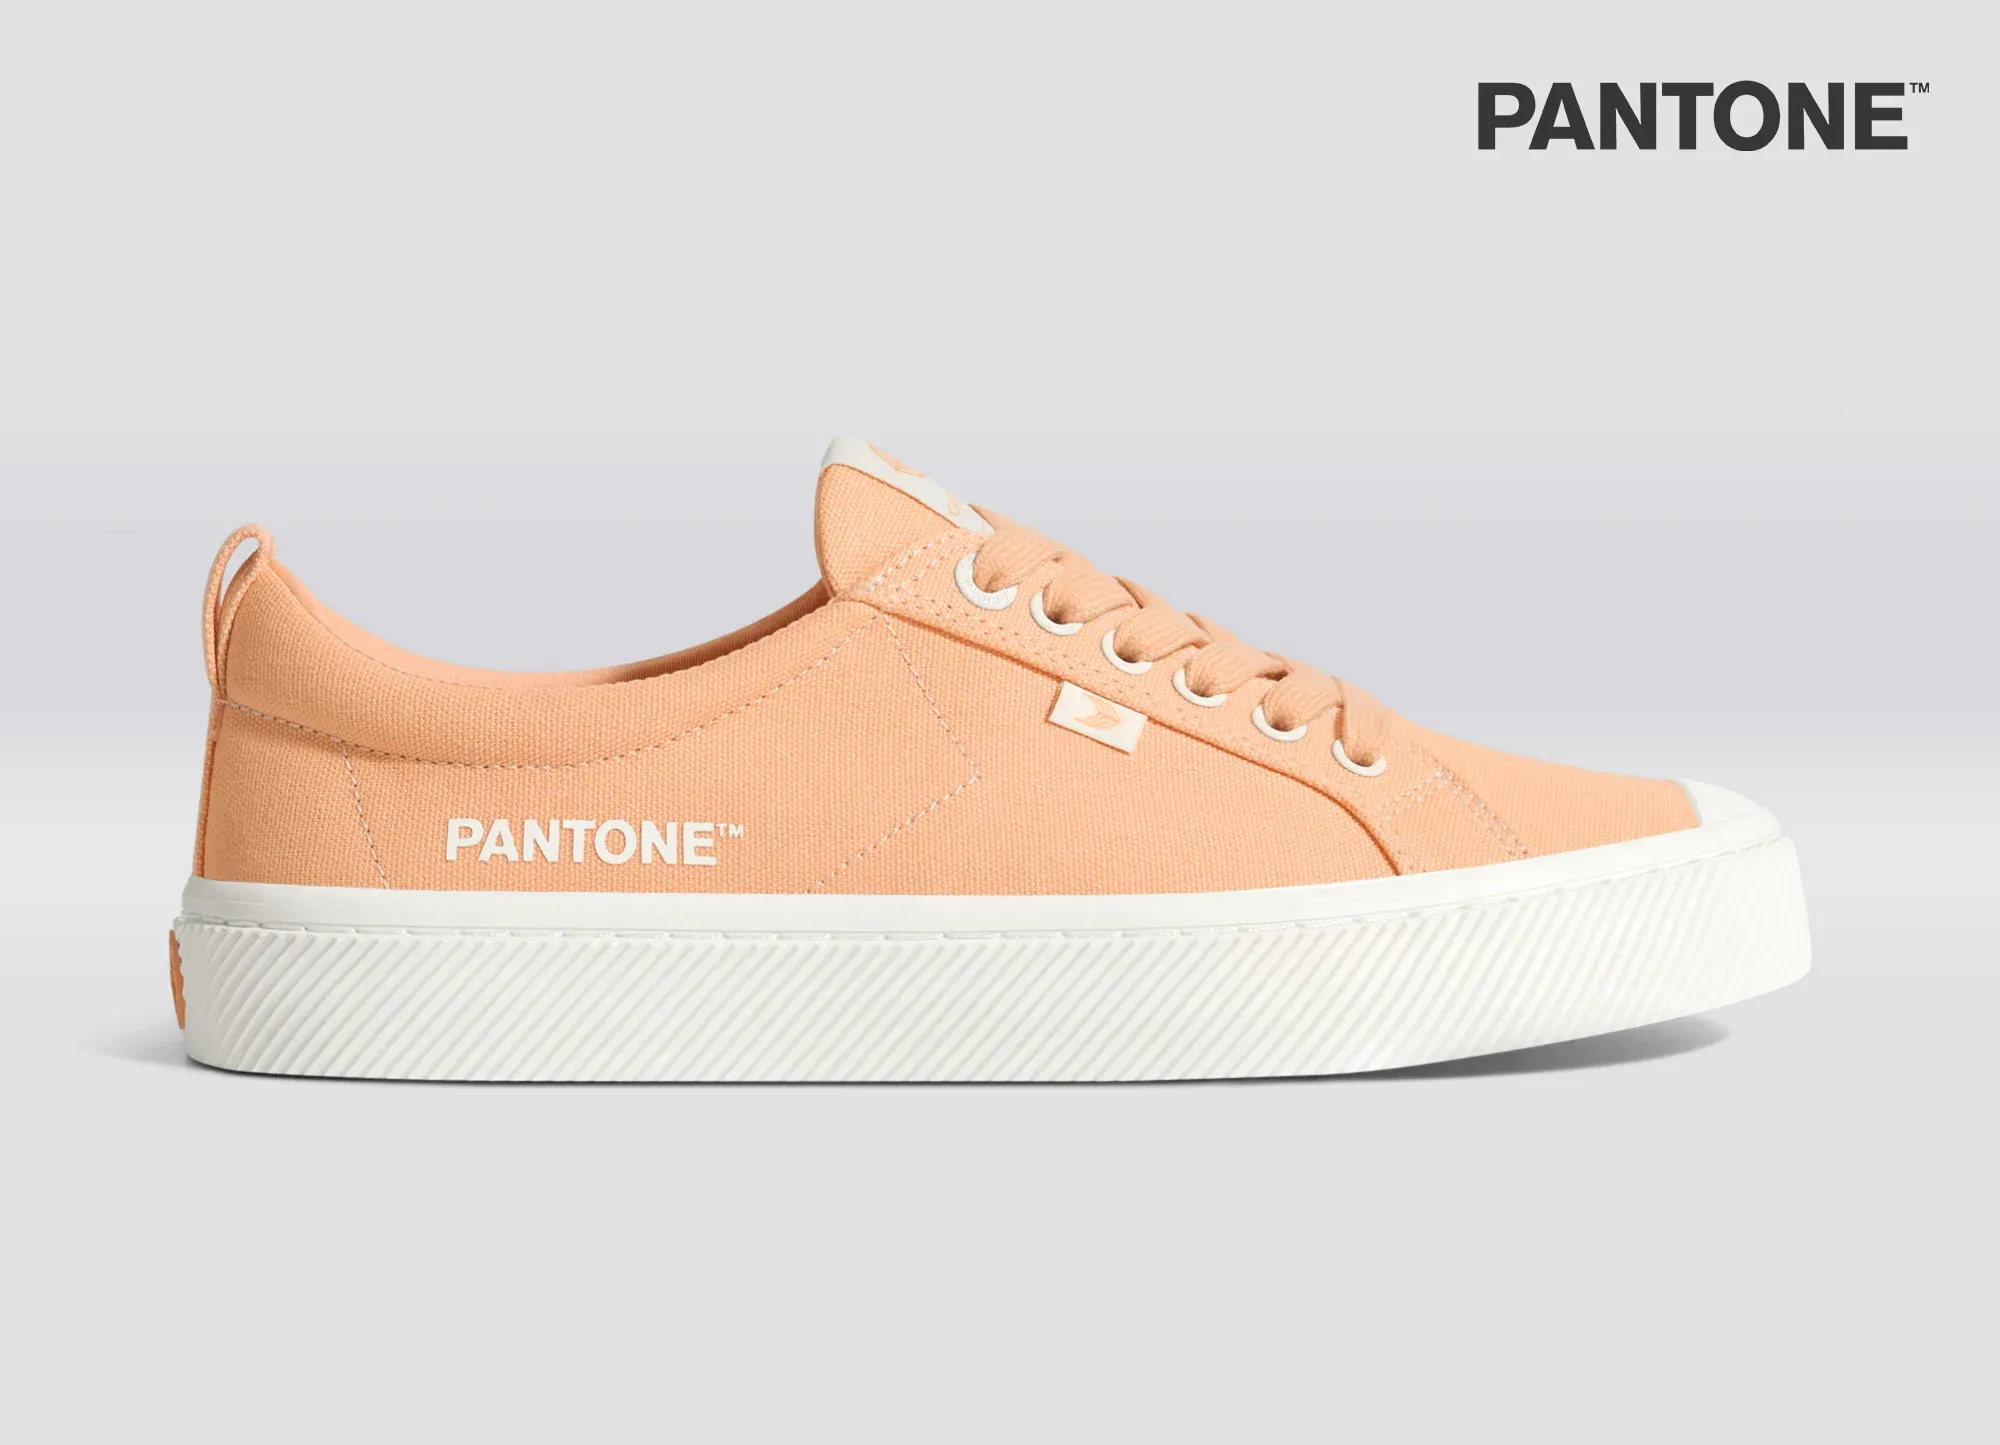 Peach Fuzz shoe by Pantone